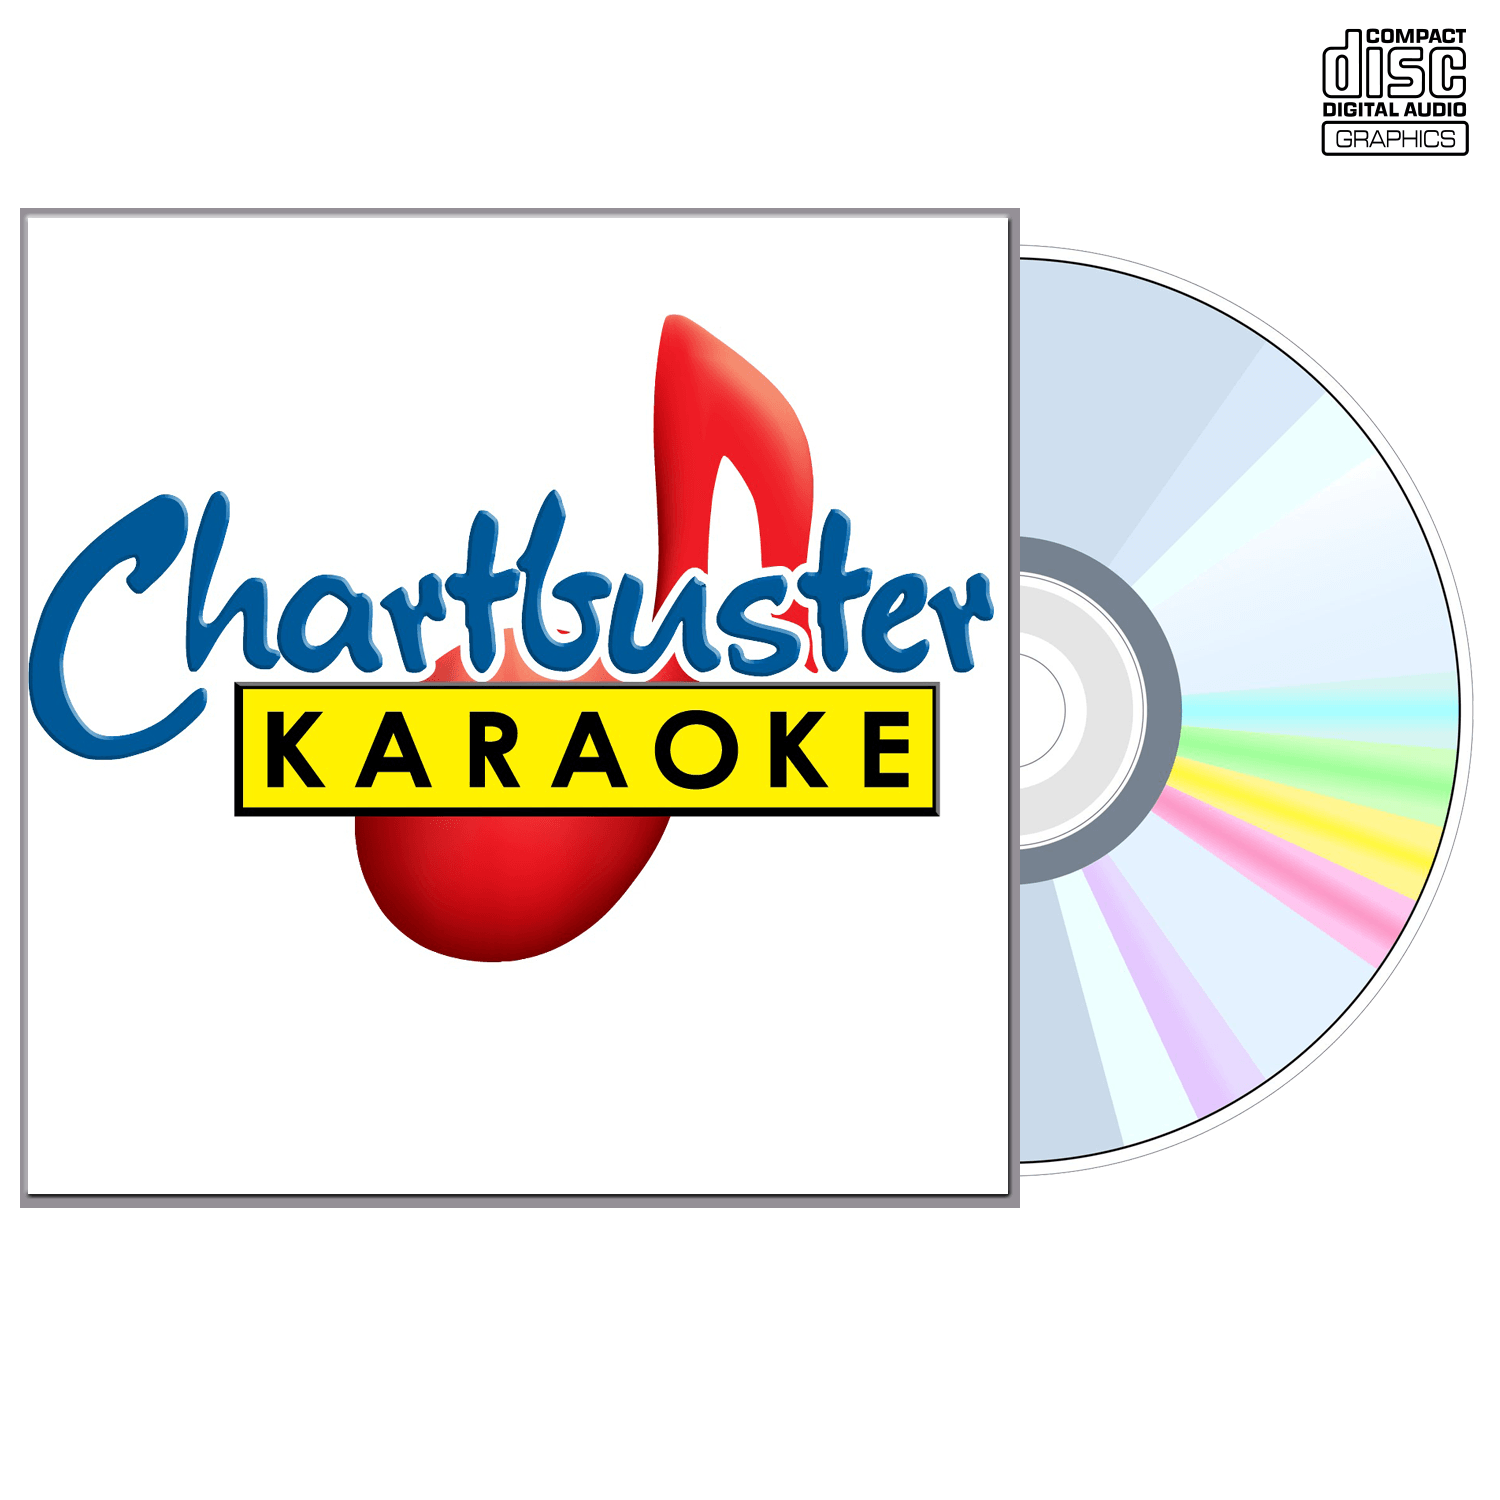 Australian Country 6 Pack - CD+G - Chartbuster Karaoke - Karaoke Home Entertainment